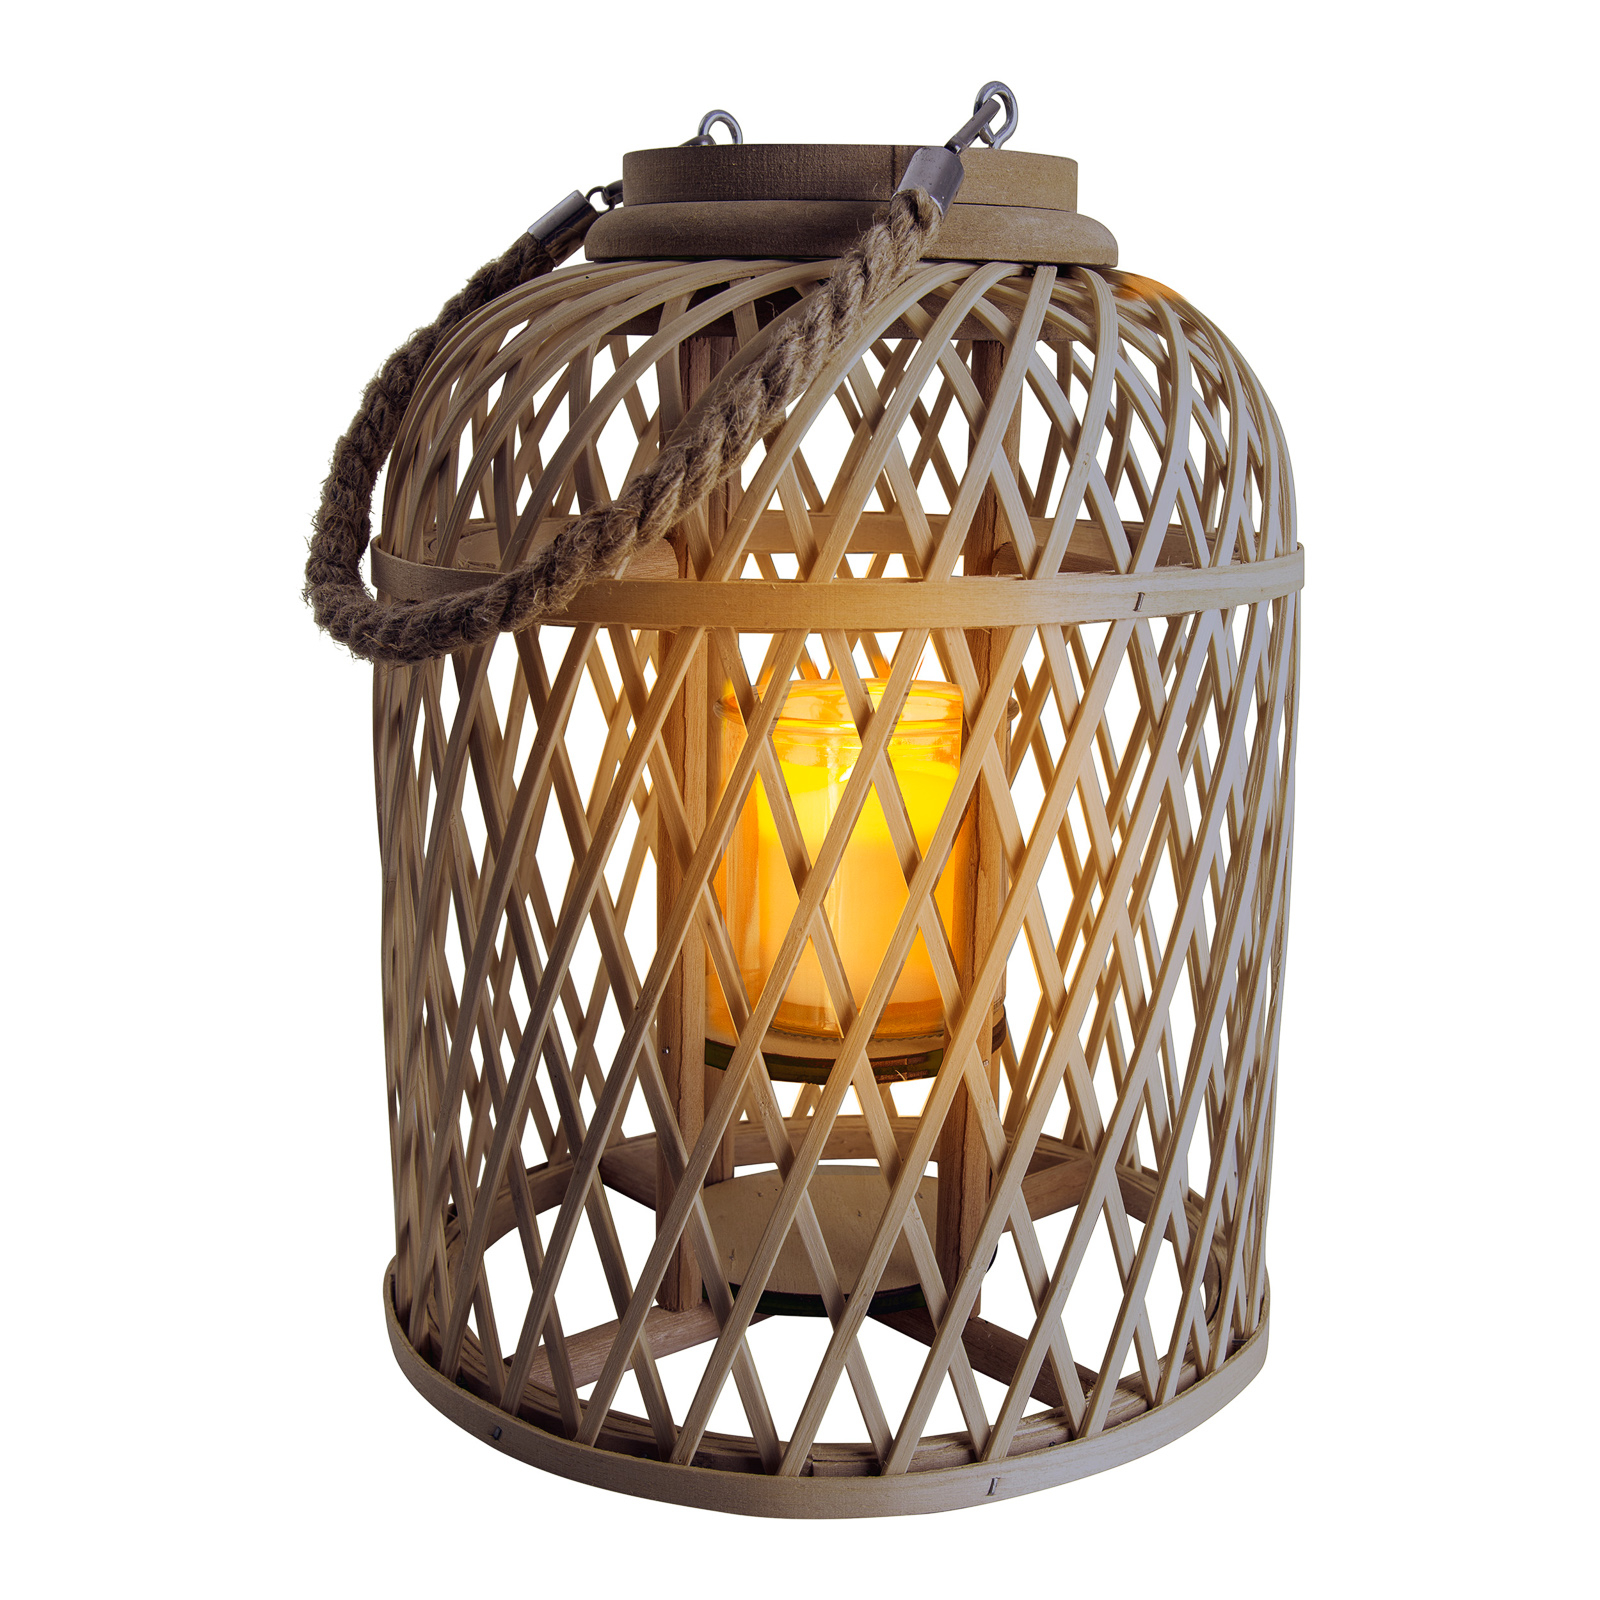 Lanterna solare LED cesto bambù alta 29 cm marrone